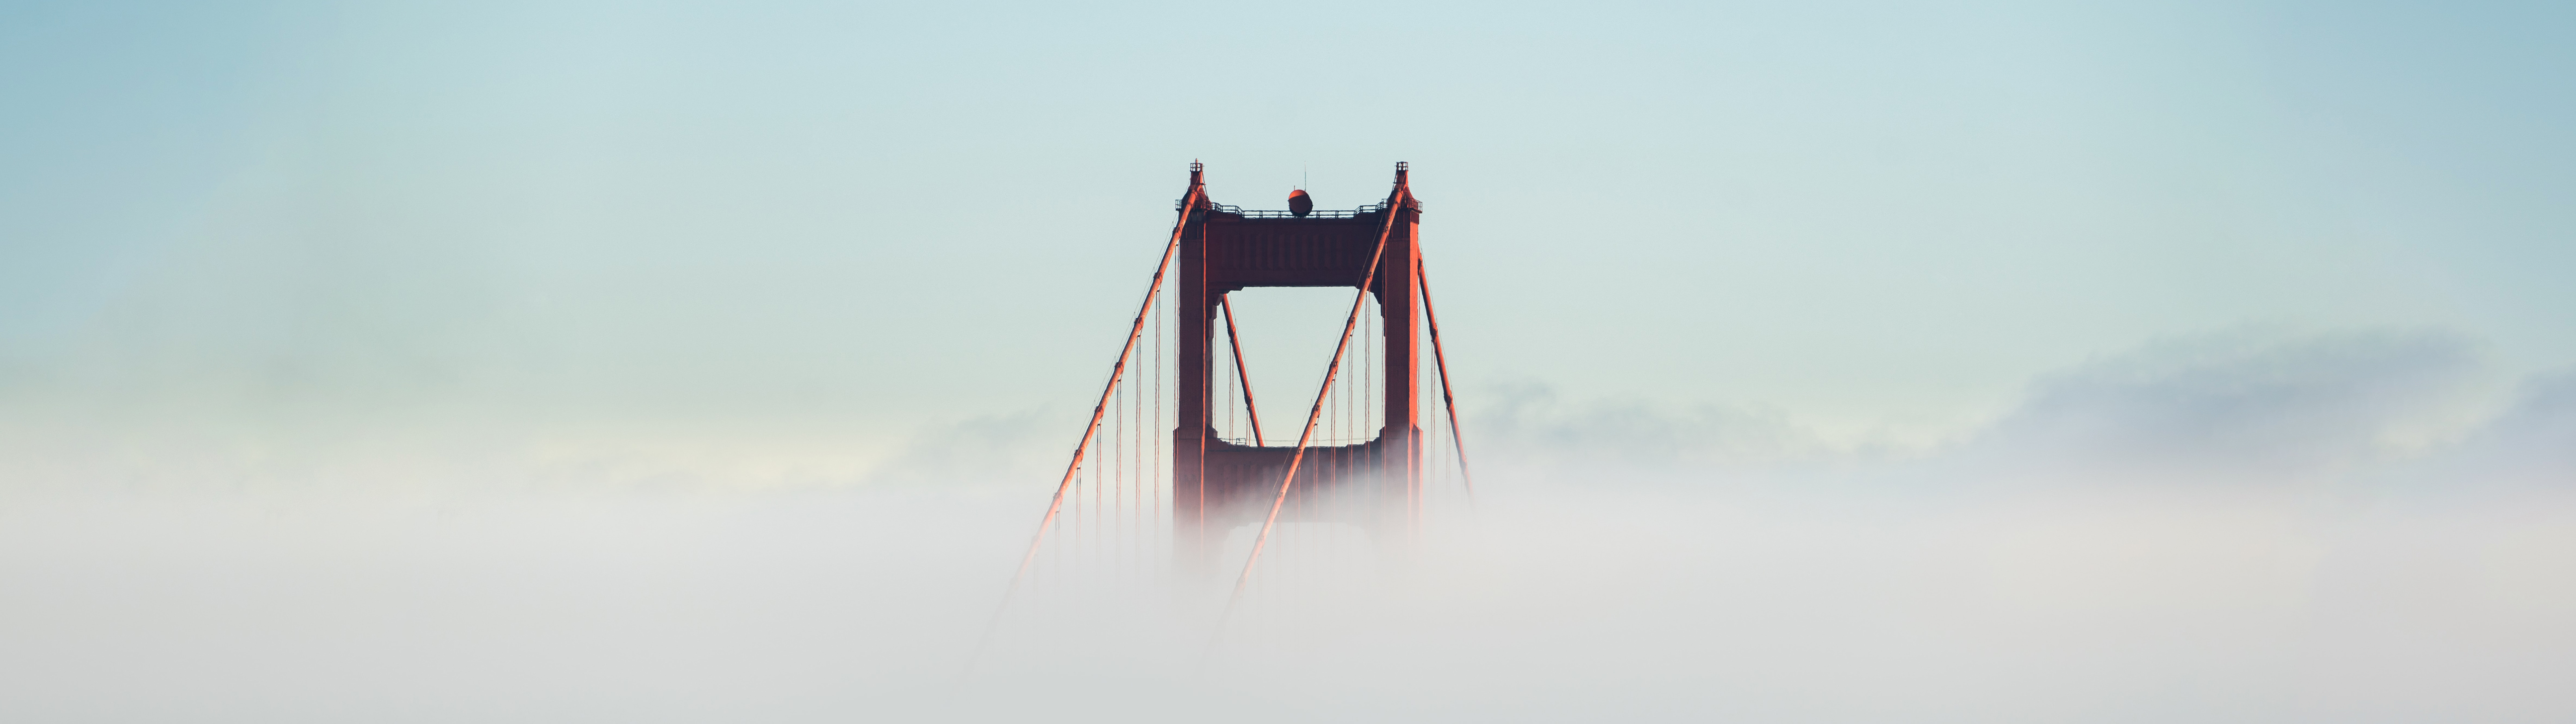 Ultrawide Clouds San Francisco Golden Gate Bridge 5120x1440